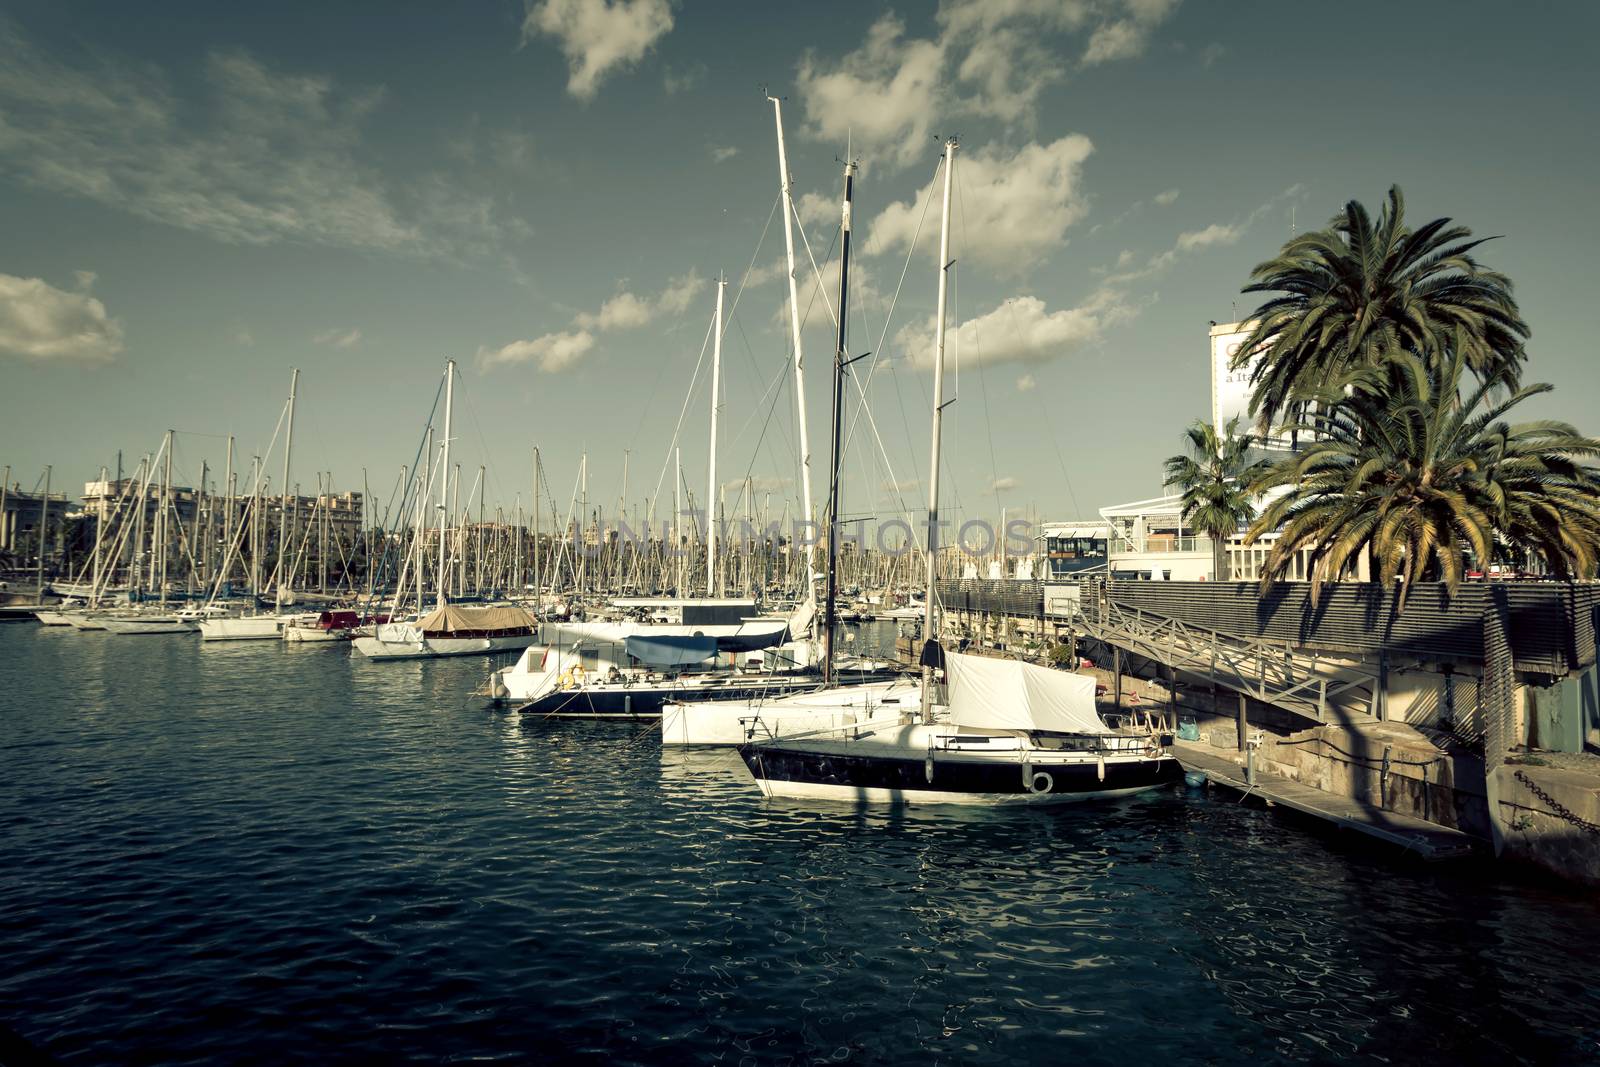 Sailboats at Port Vell, Barcelona - Spain.